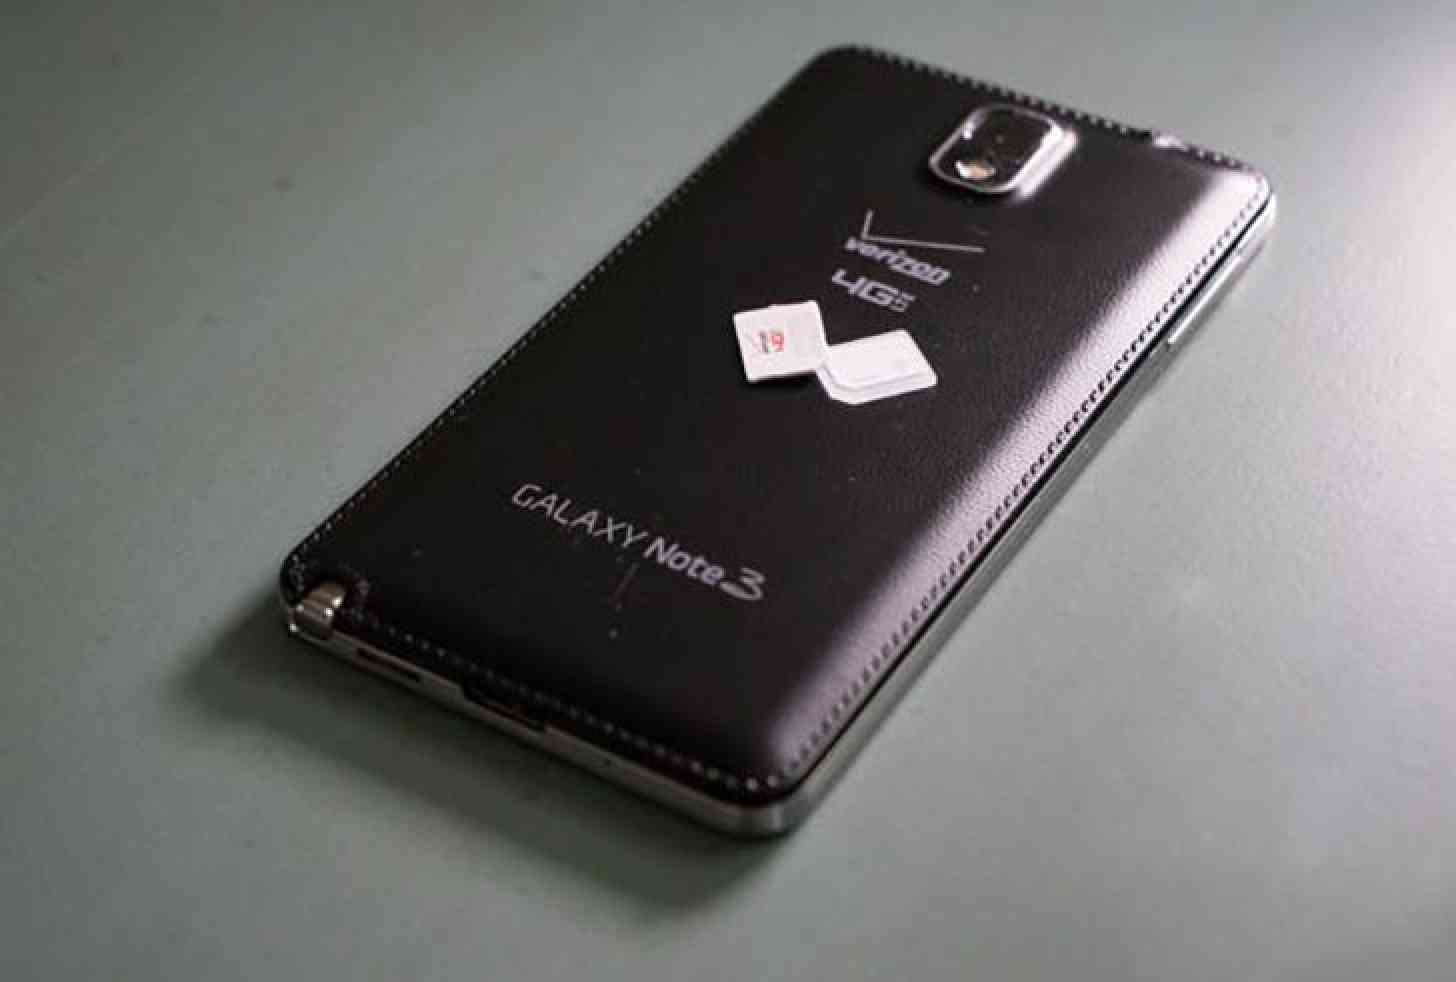 Verizon Galaxy Note 3 SIM card